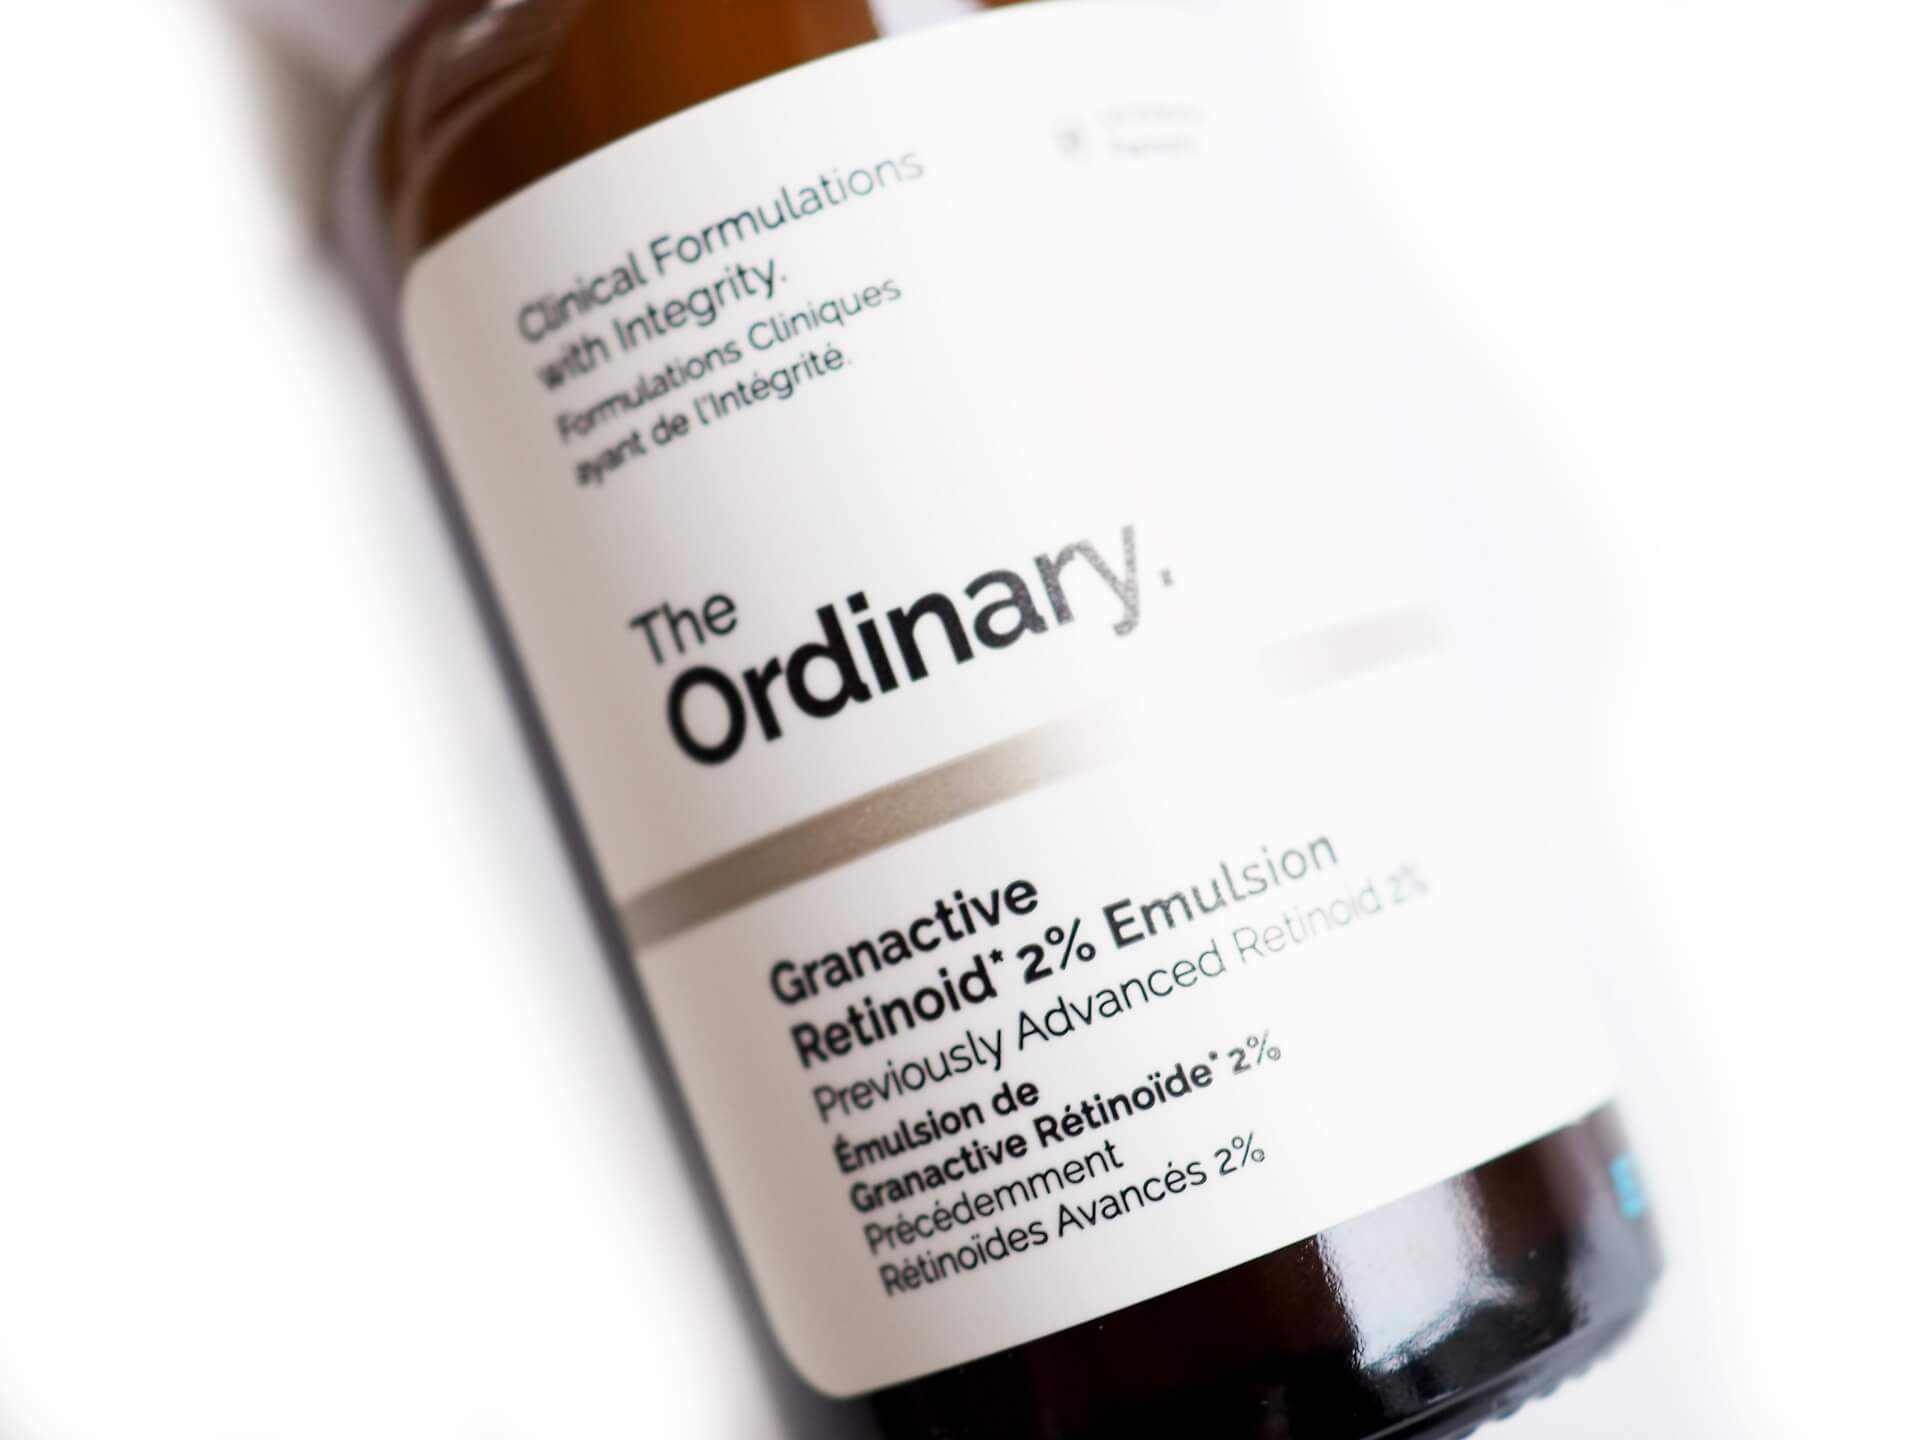 Granactive retinoid 2% emulsion The Ordinary - APGMakeupSolution